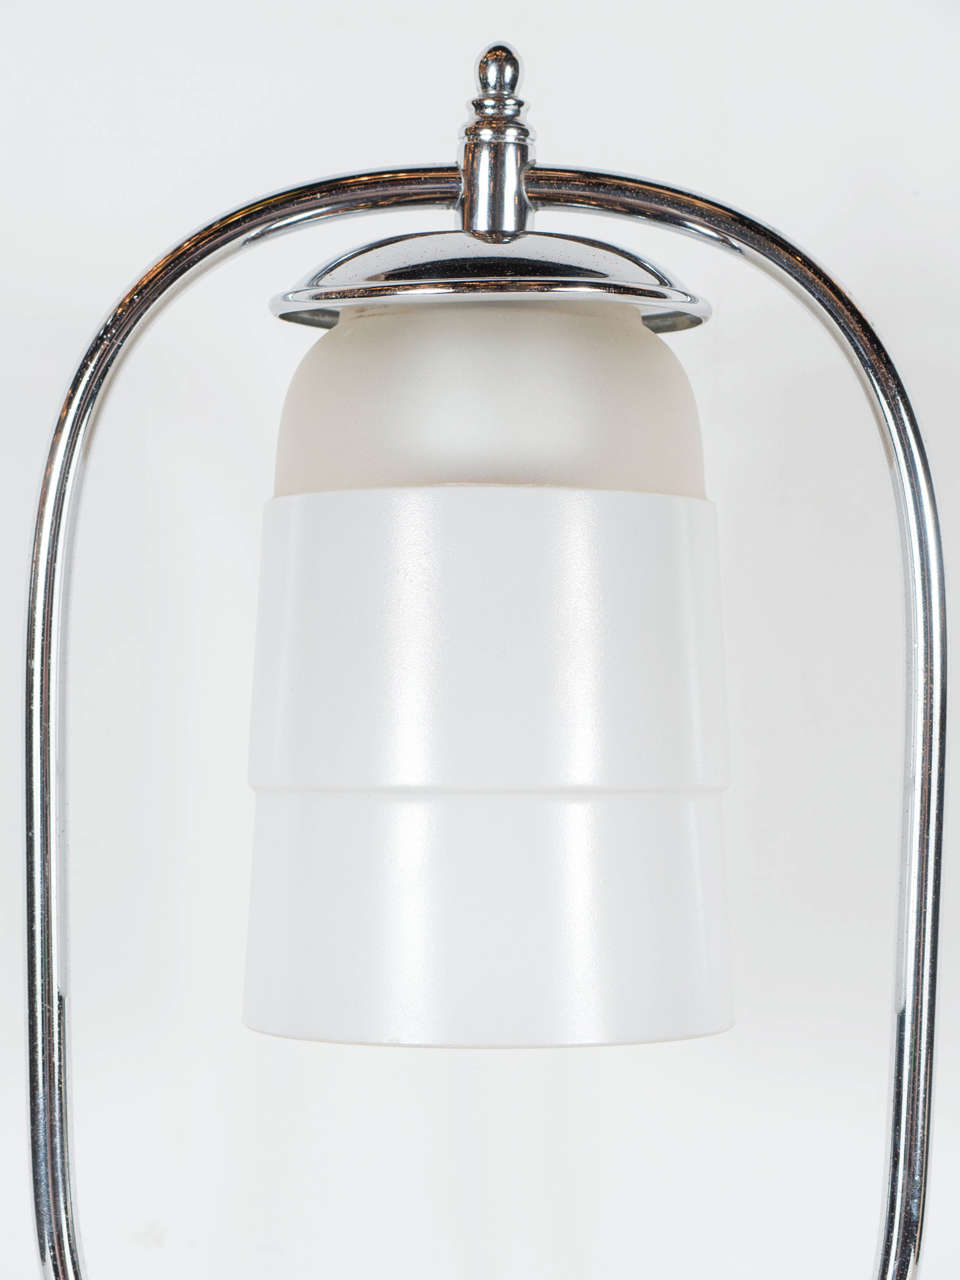 American Art Deco Machine Age Table Lamp in the Manner of Walter Von Nessen